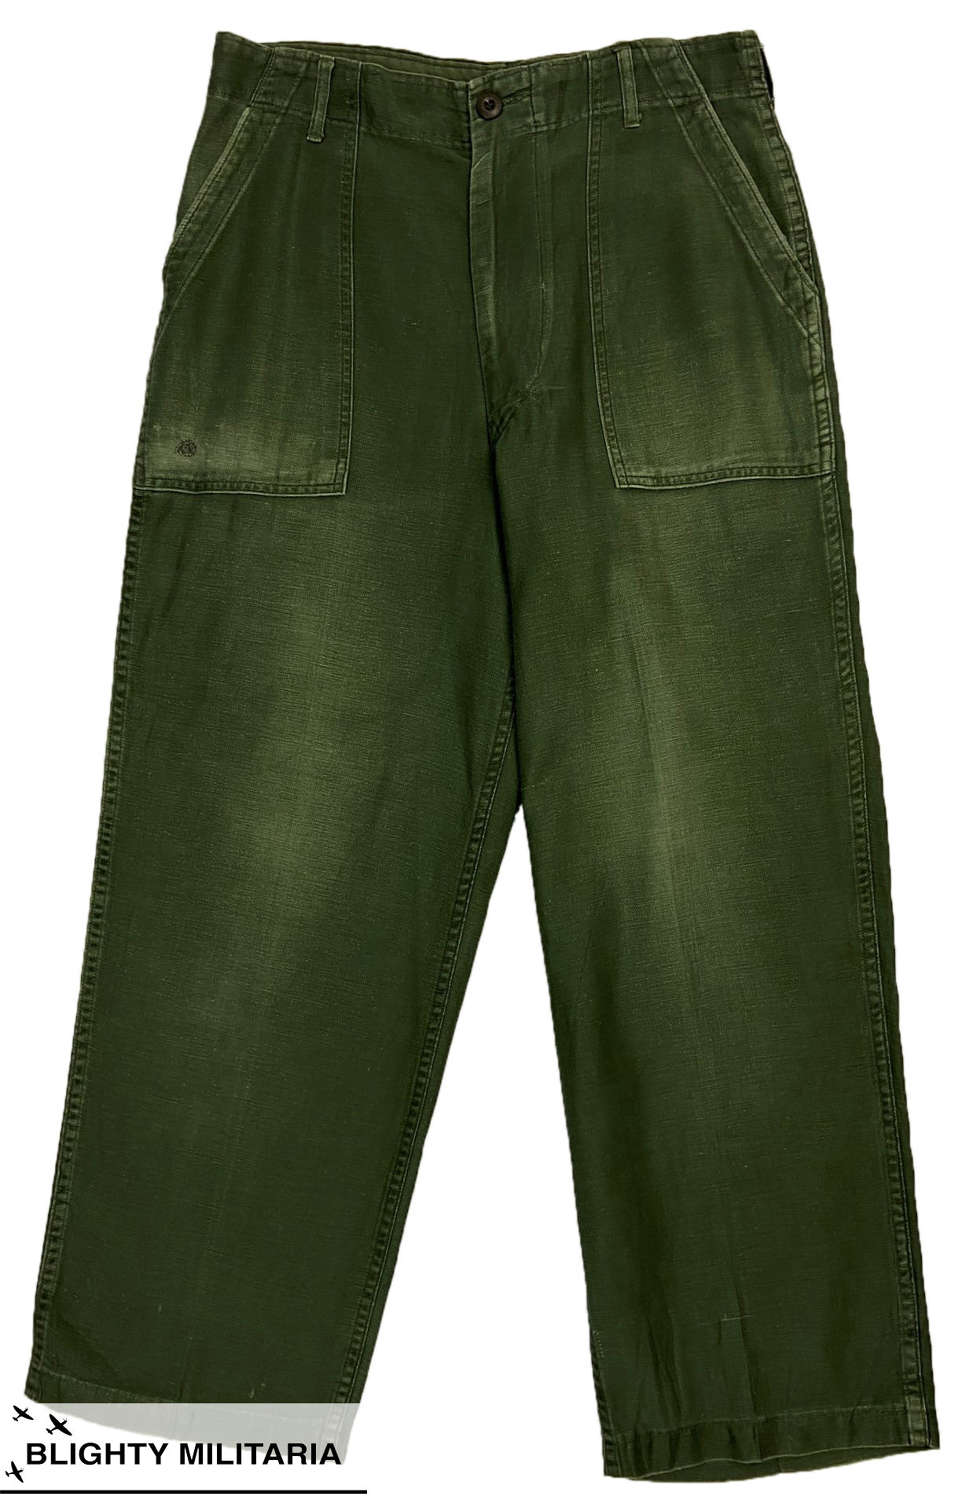 Original 1969 Dated US Army OG 107 Fatigue Pants - 32x27